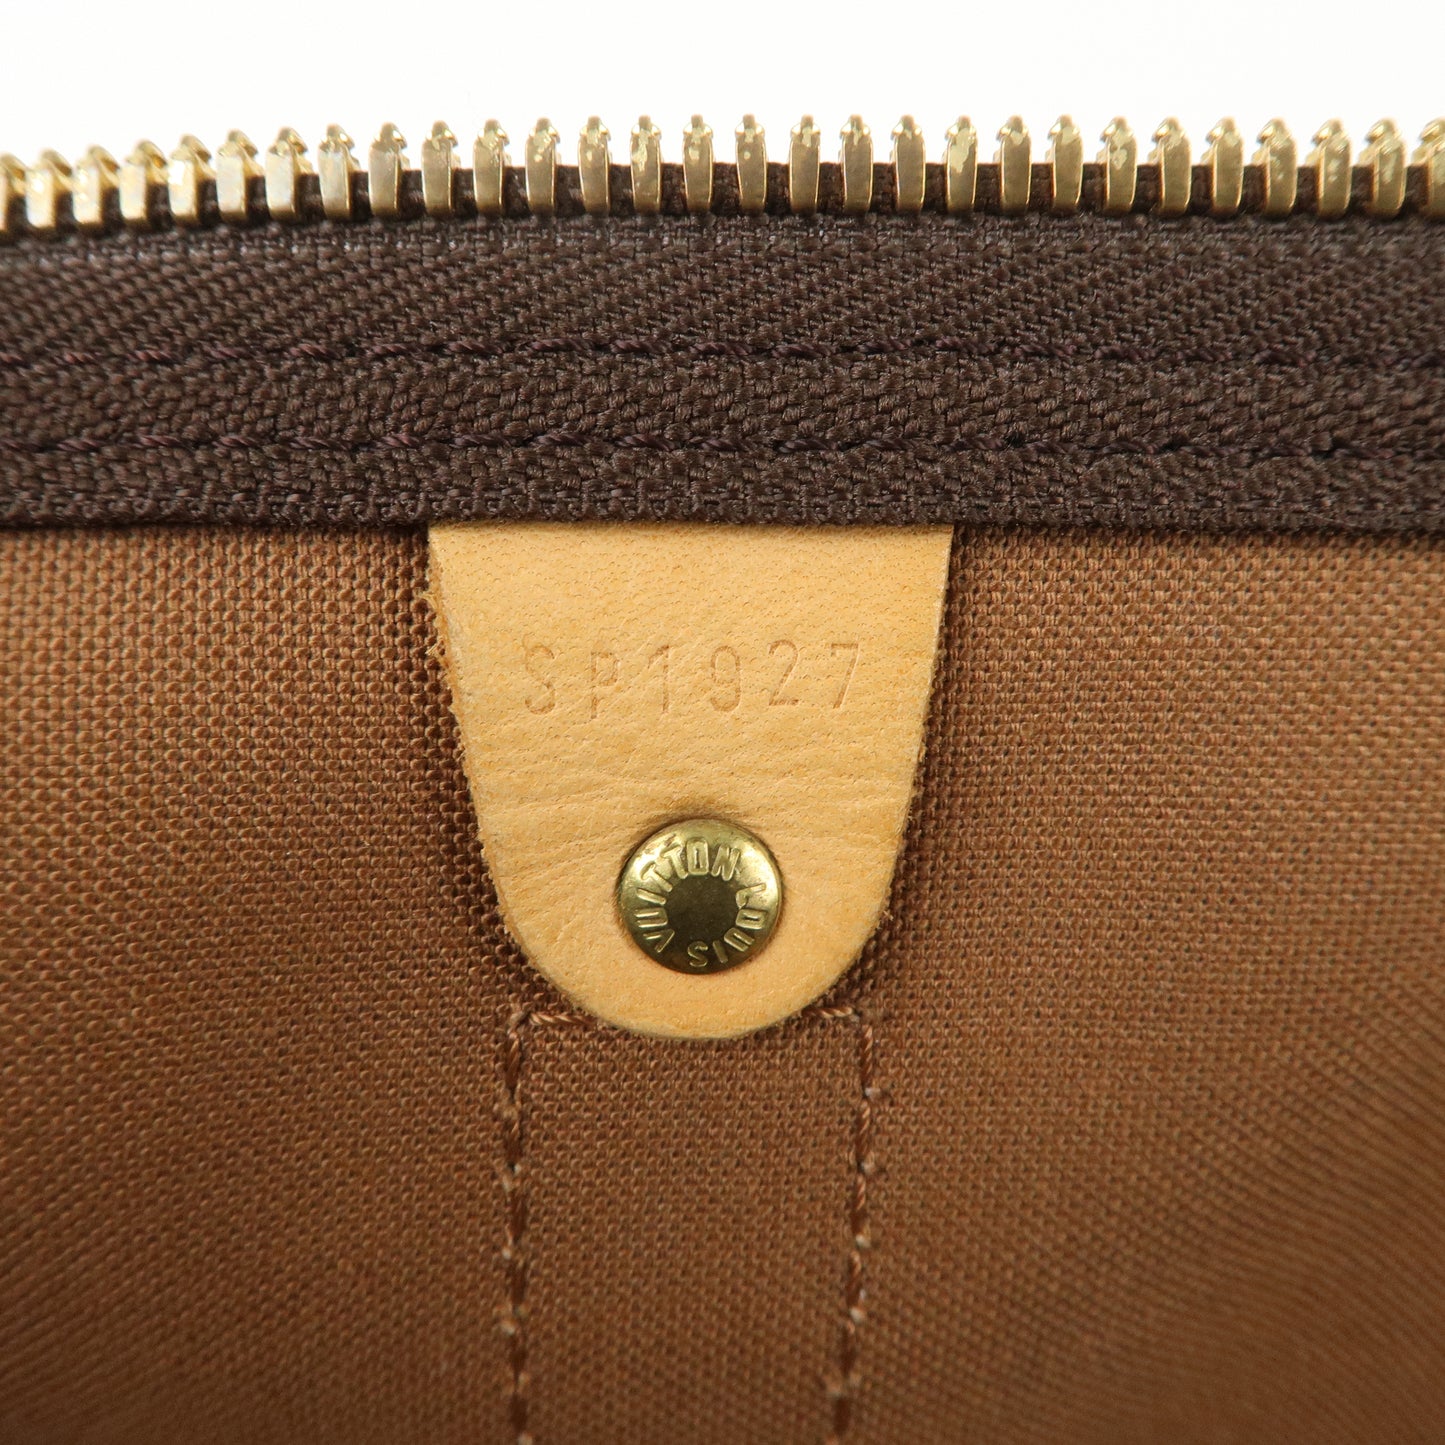 Louis Vuitton Monogram Keep All 45 Boston Bag Brown M41428